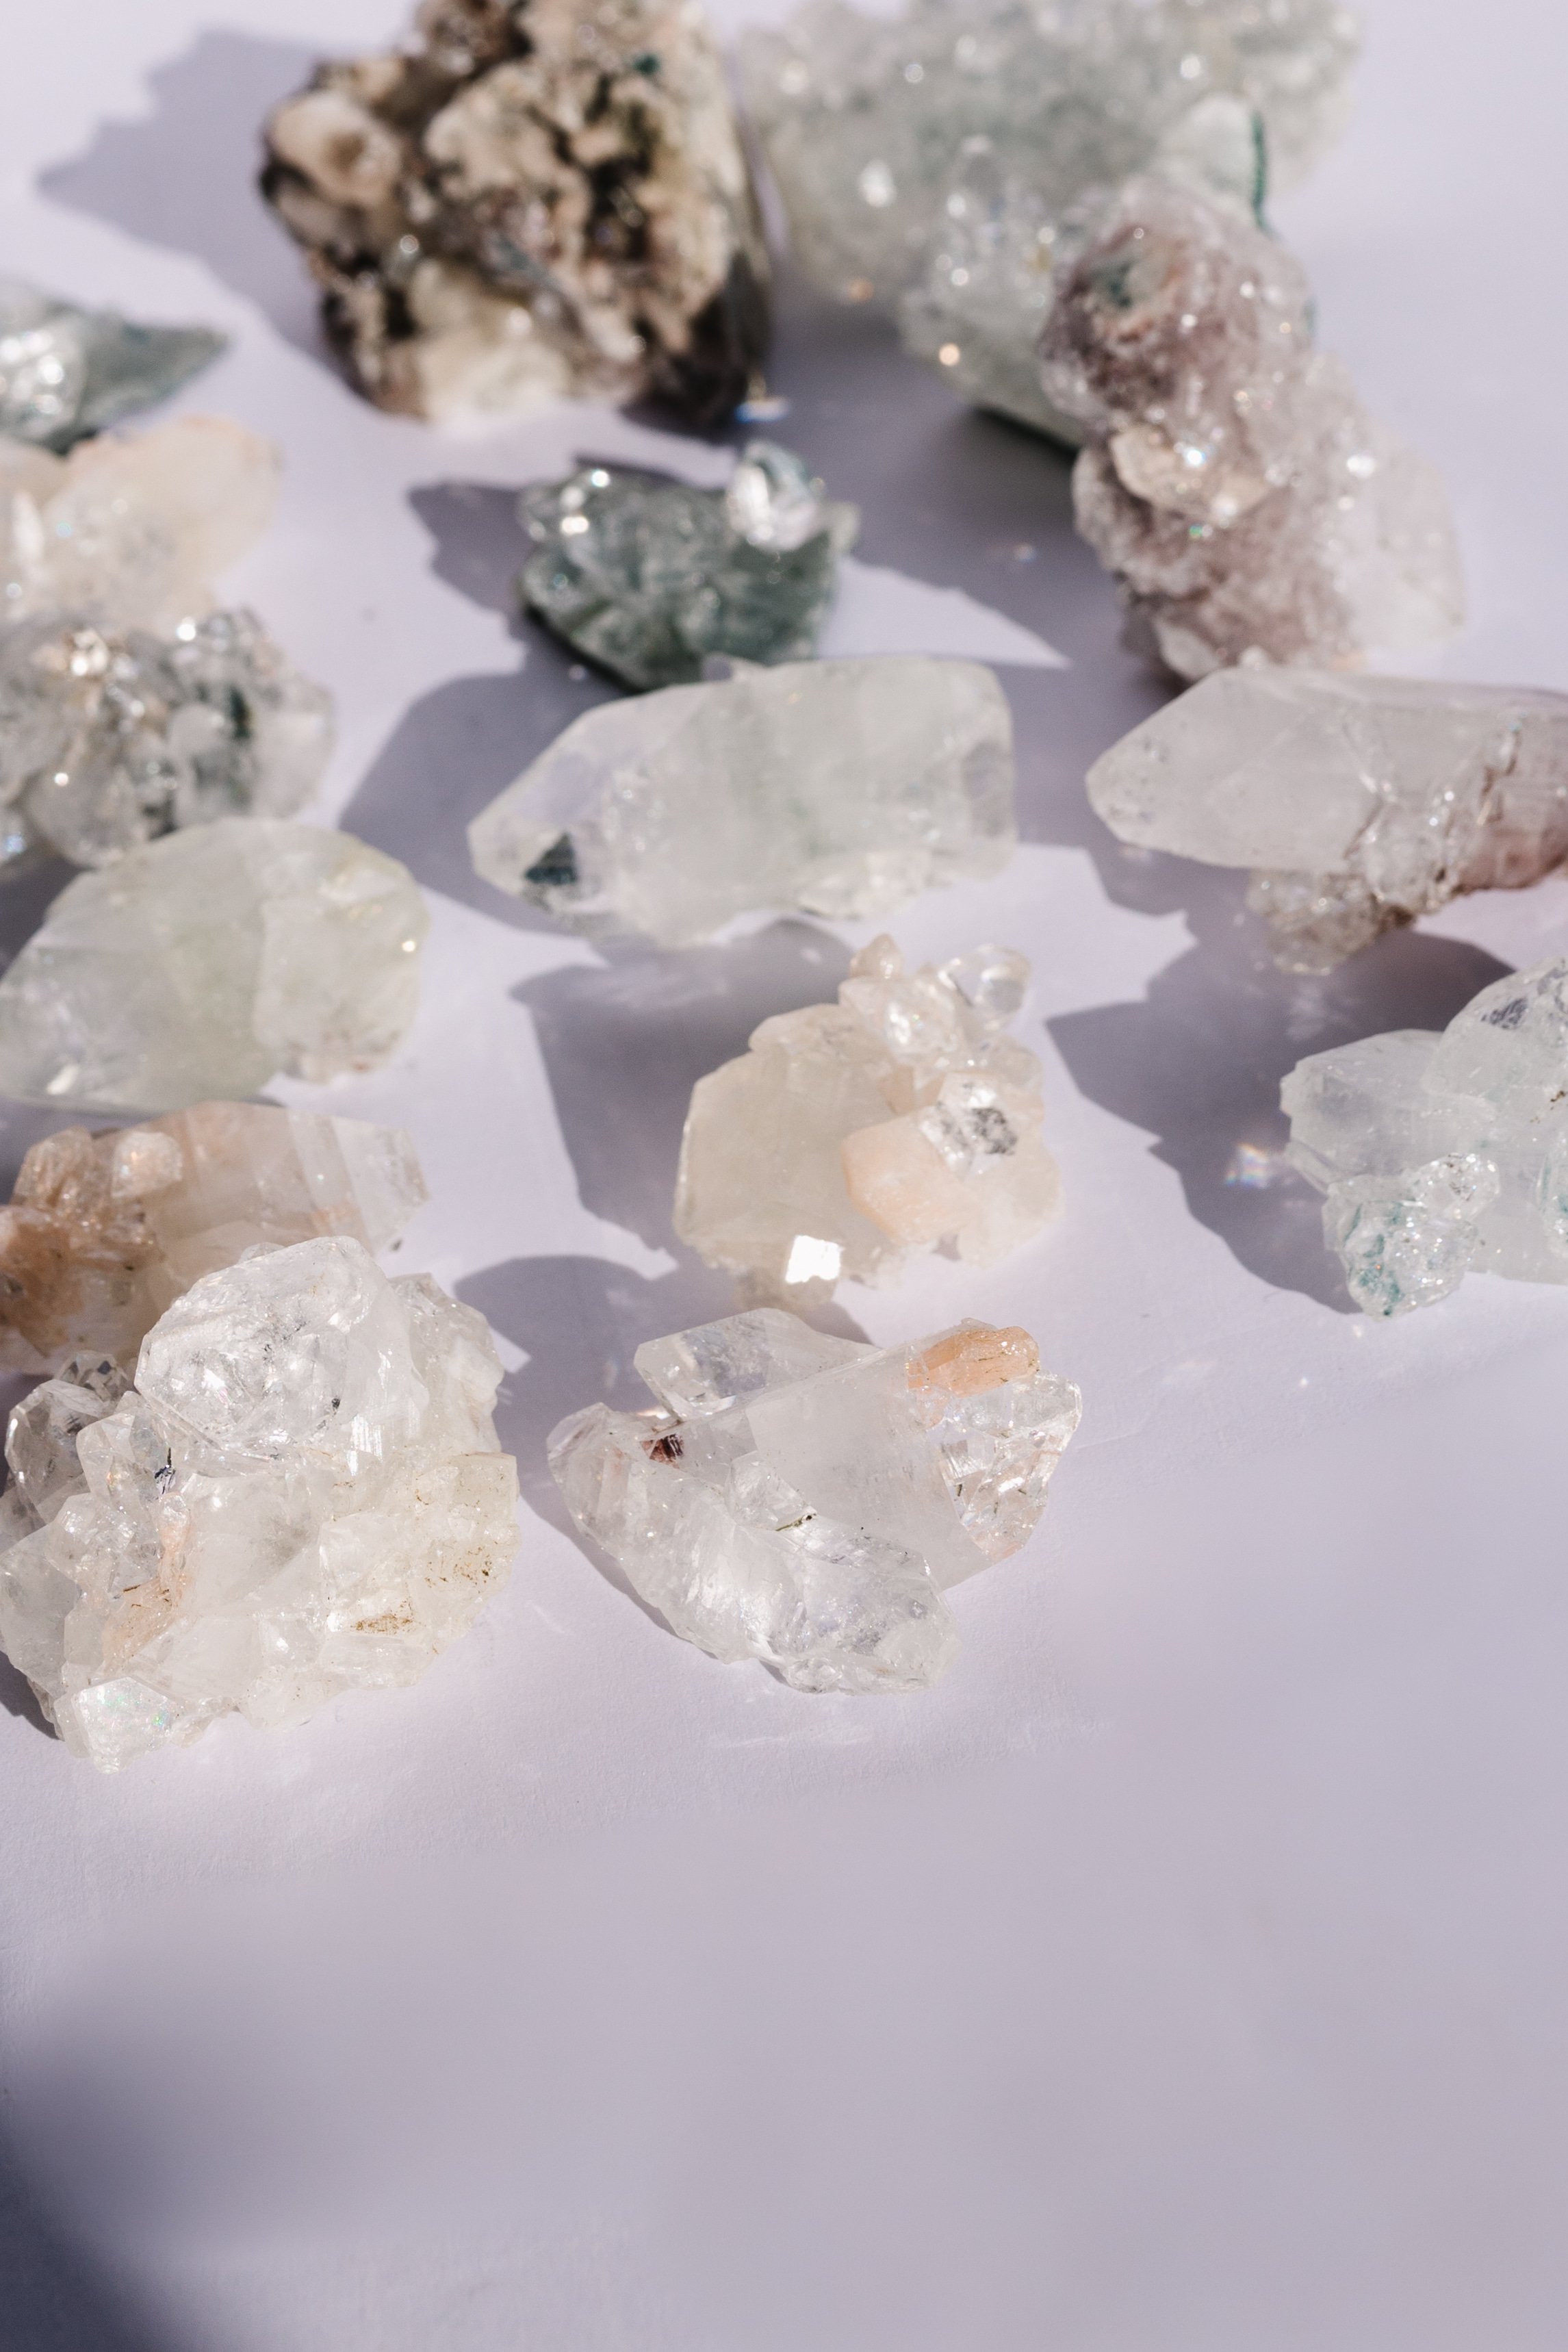 kaitlynn-marquis-crystals-product-photographer-vancouer-portland-107.jpg